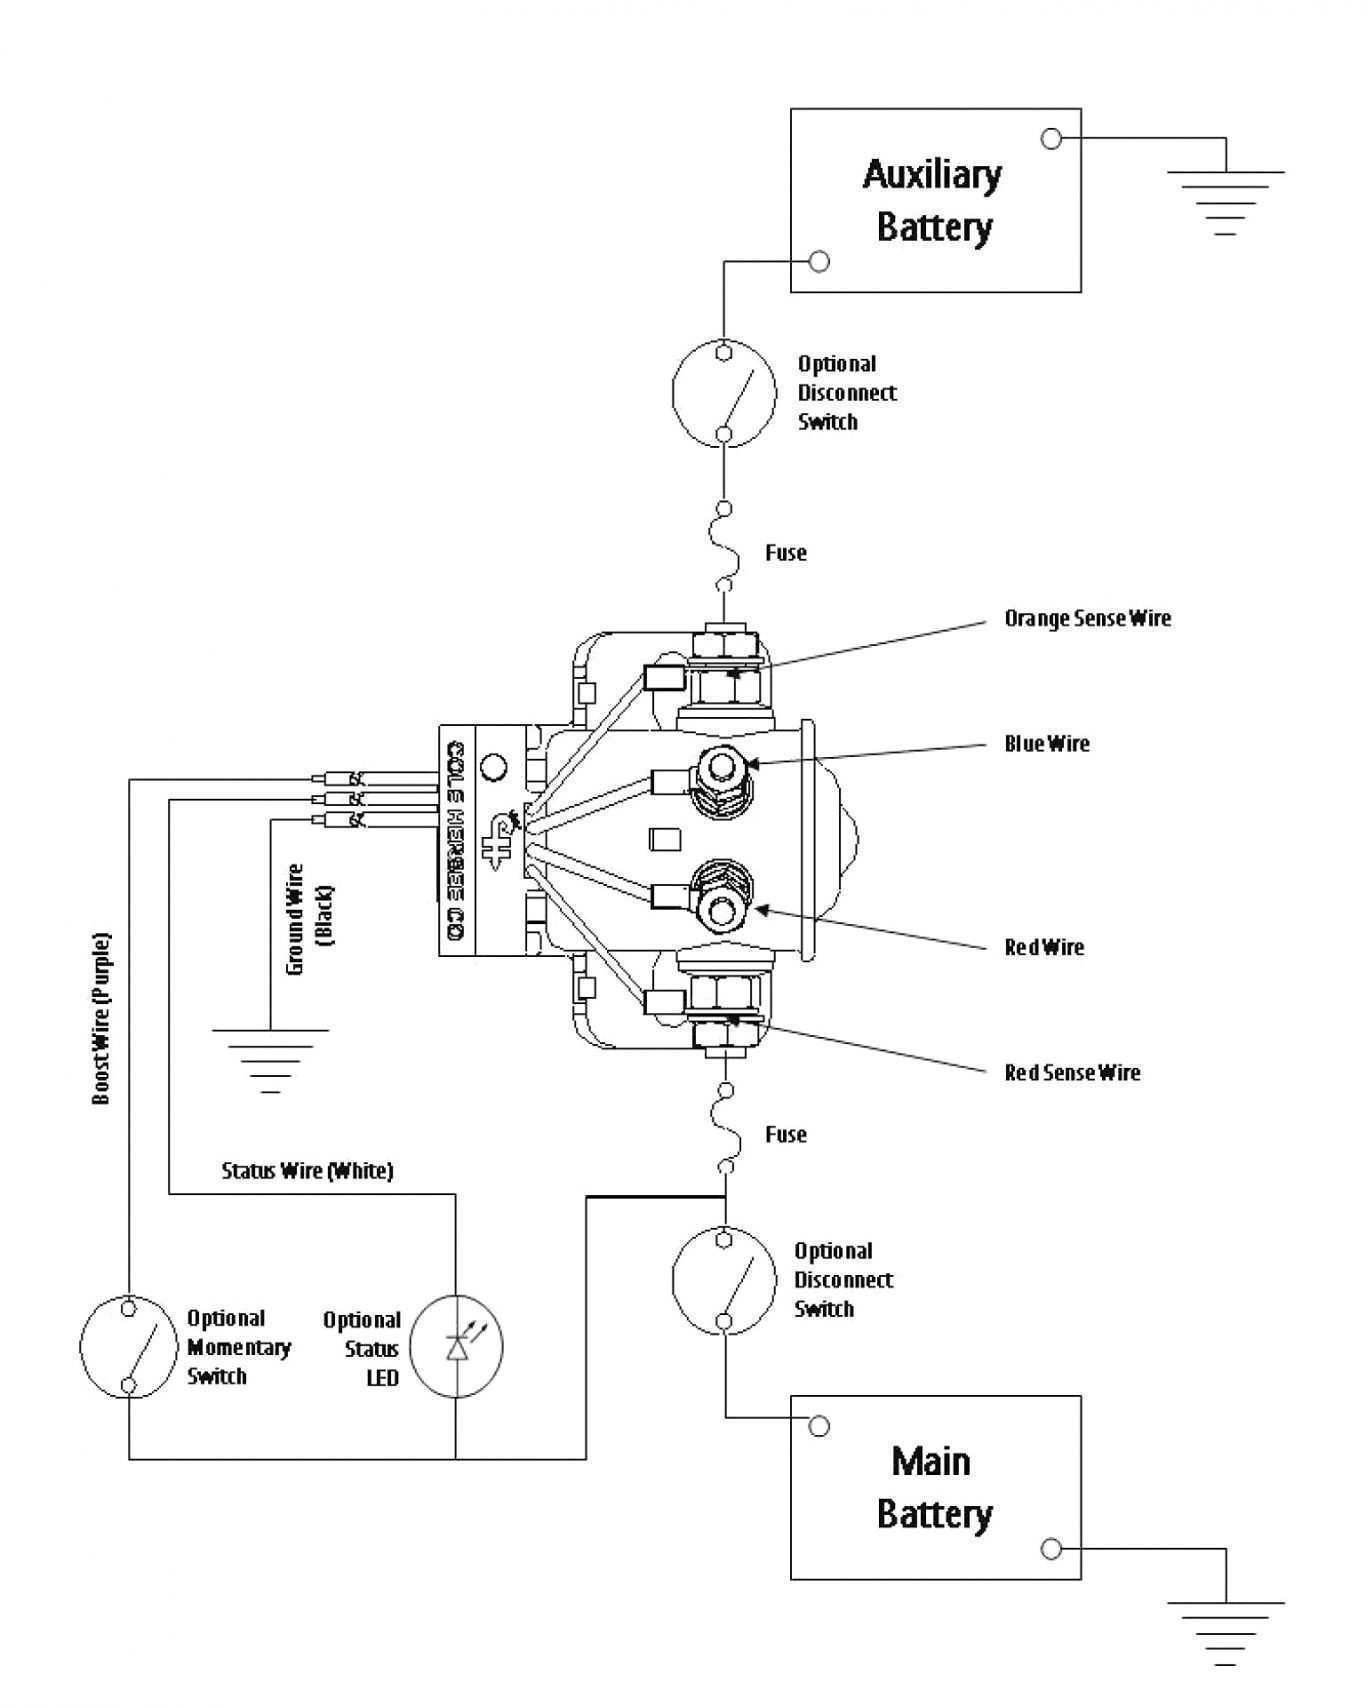 Car Capacitor Wiring Diagram 36 Fresh Car Audio Capacitor Farad Chart Of Car Capacitor Wiring Diagram